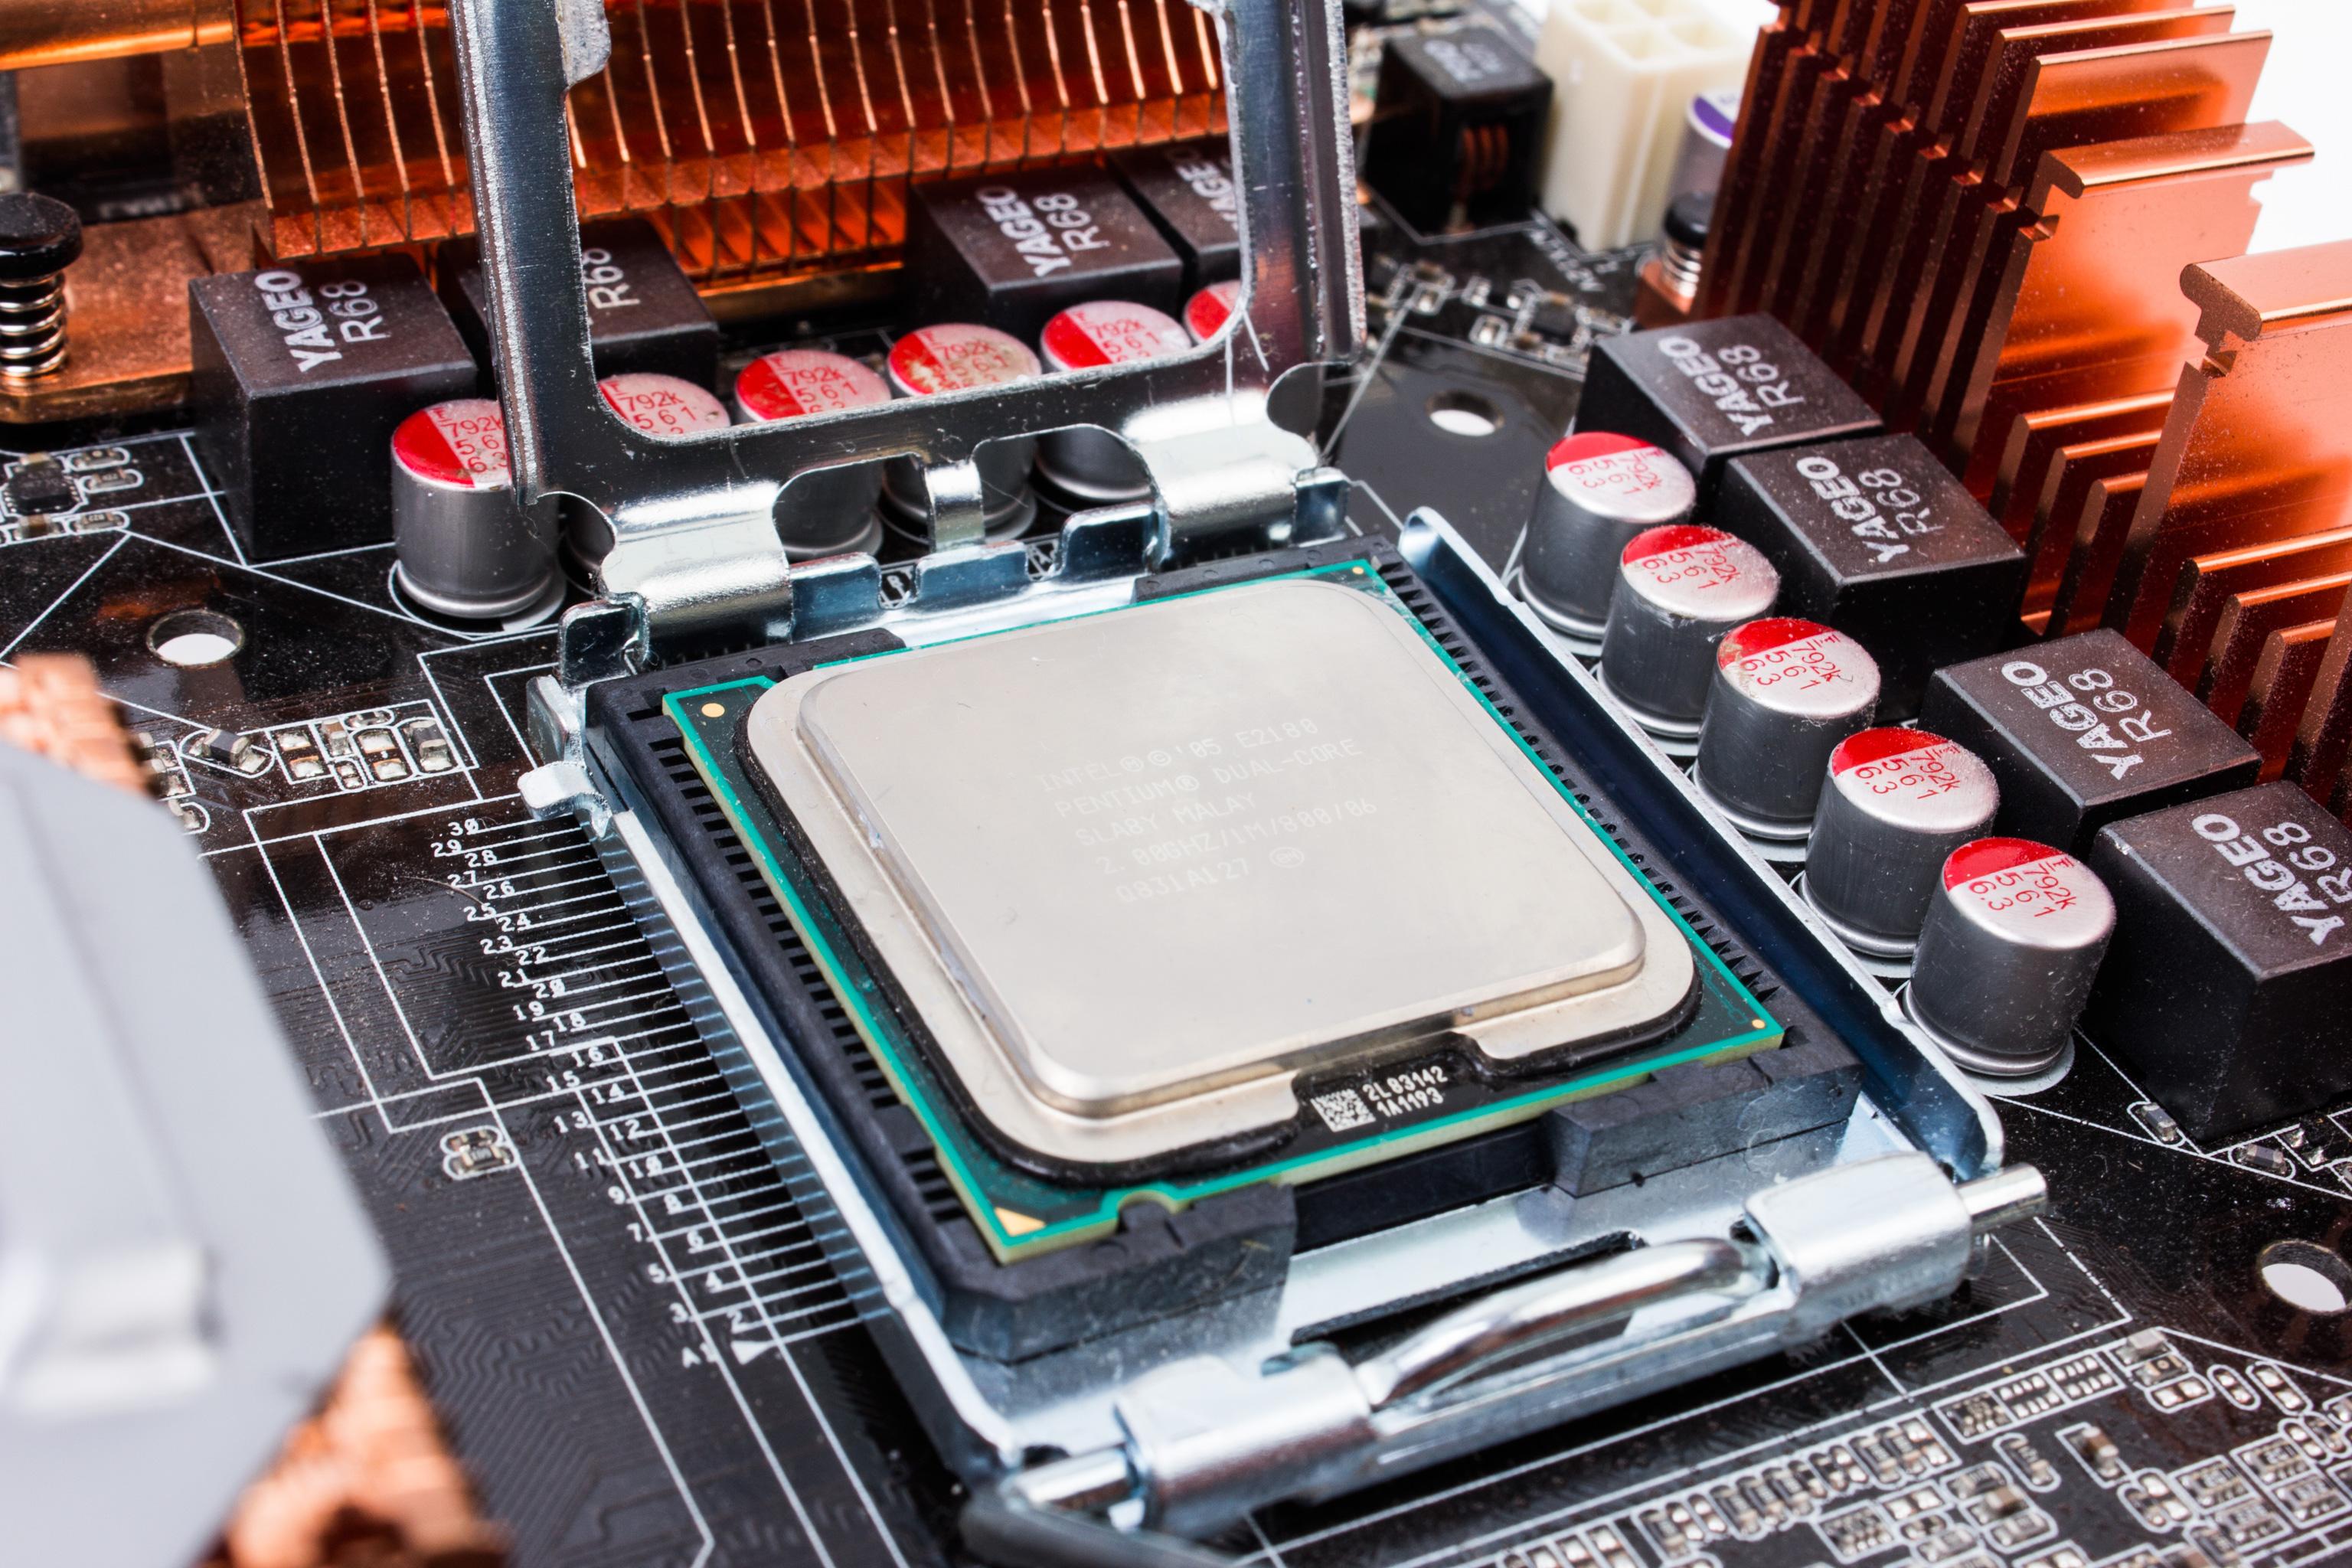 Intel Pentium E2180: Overmoden for utskiftning i 2013.Foto: Varg Aamo, Hardware.no